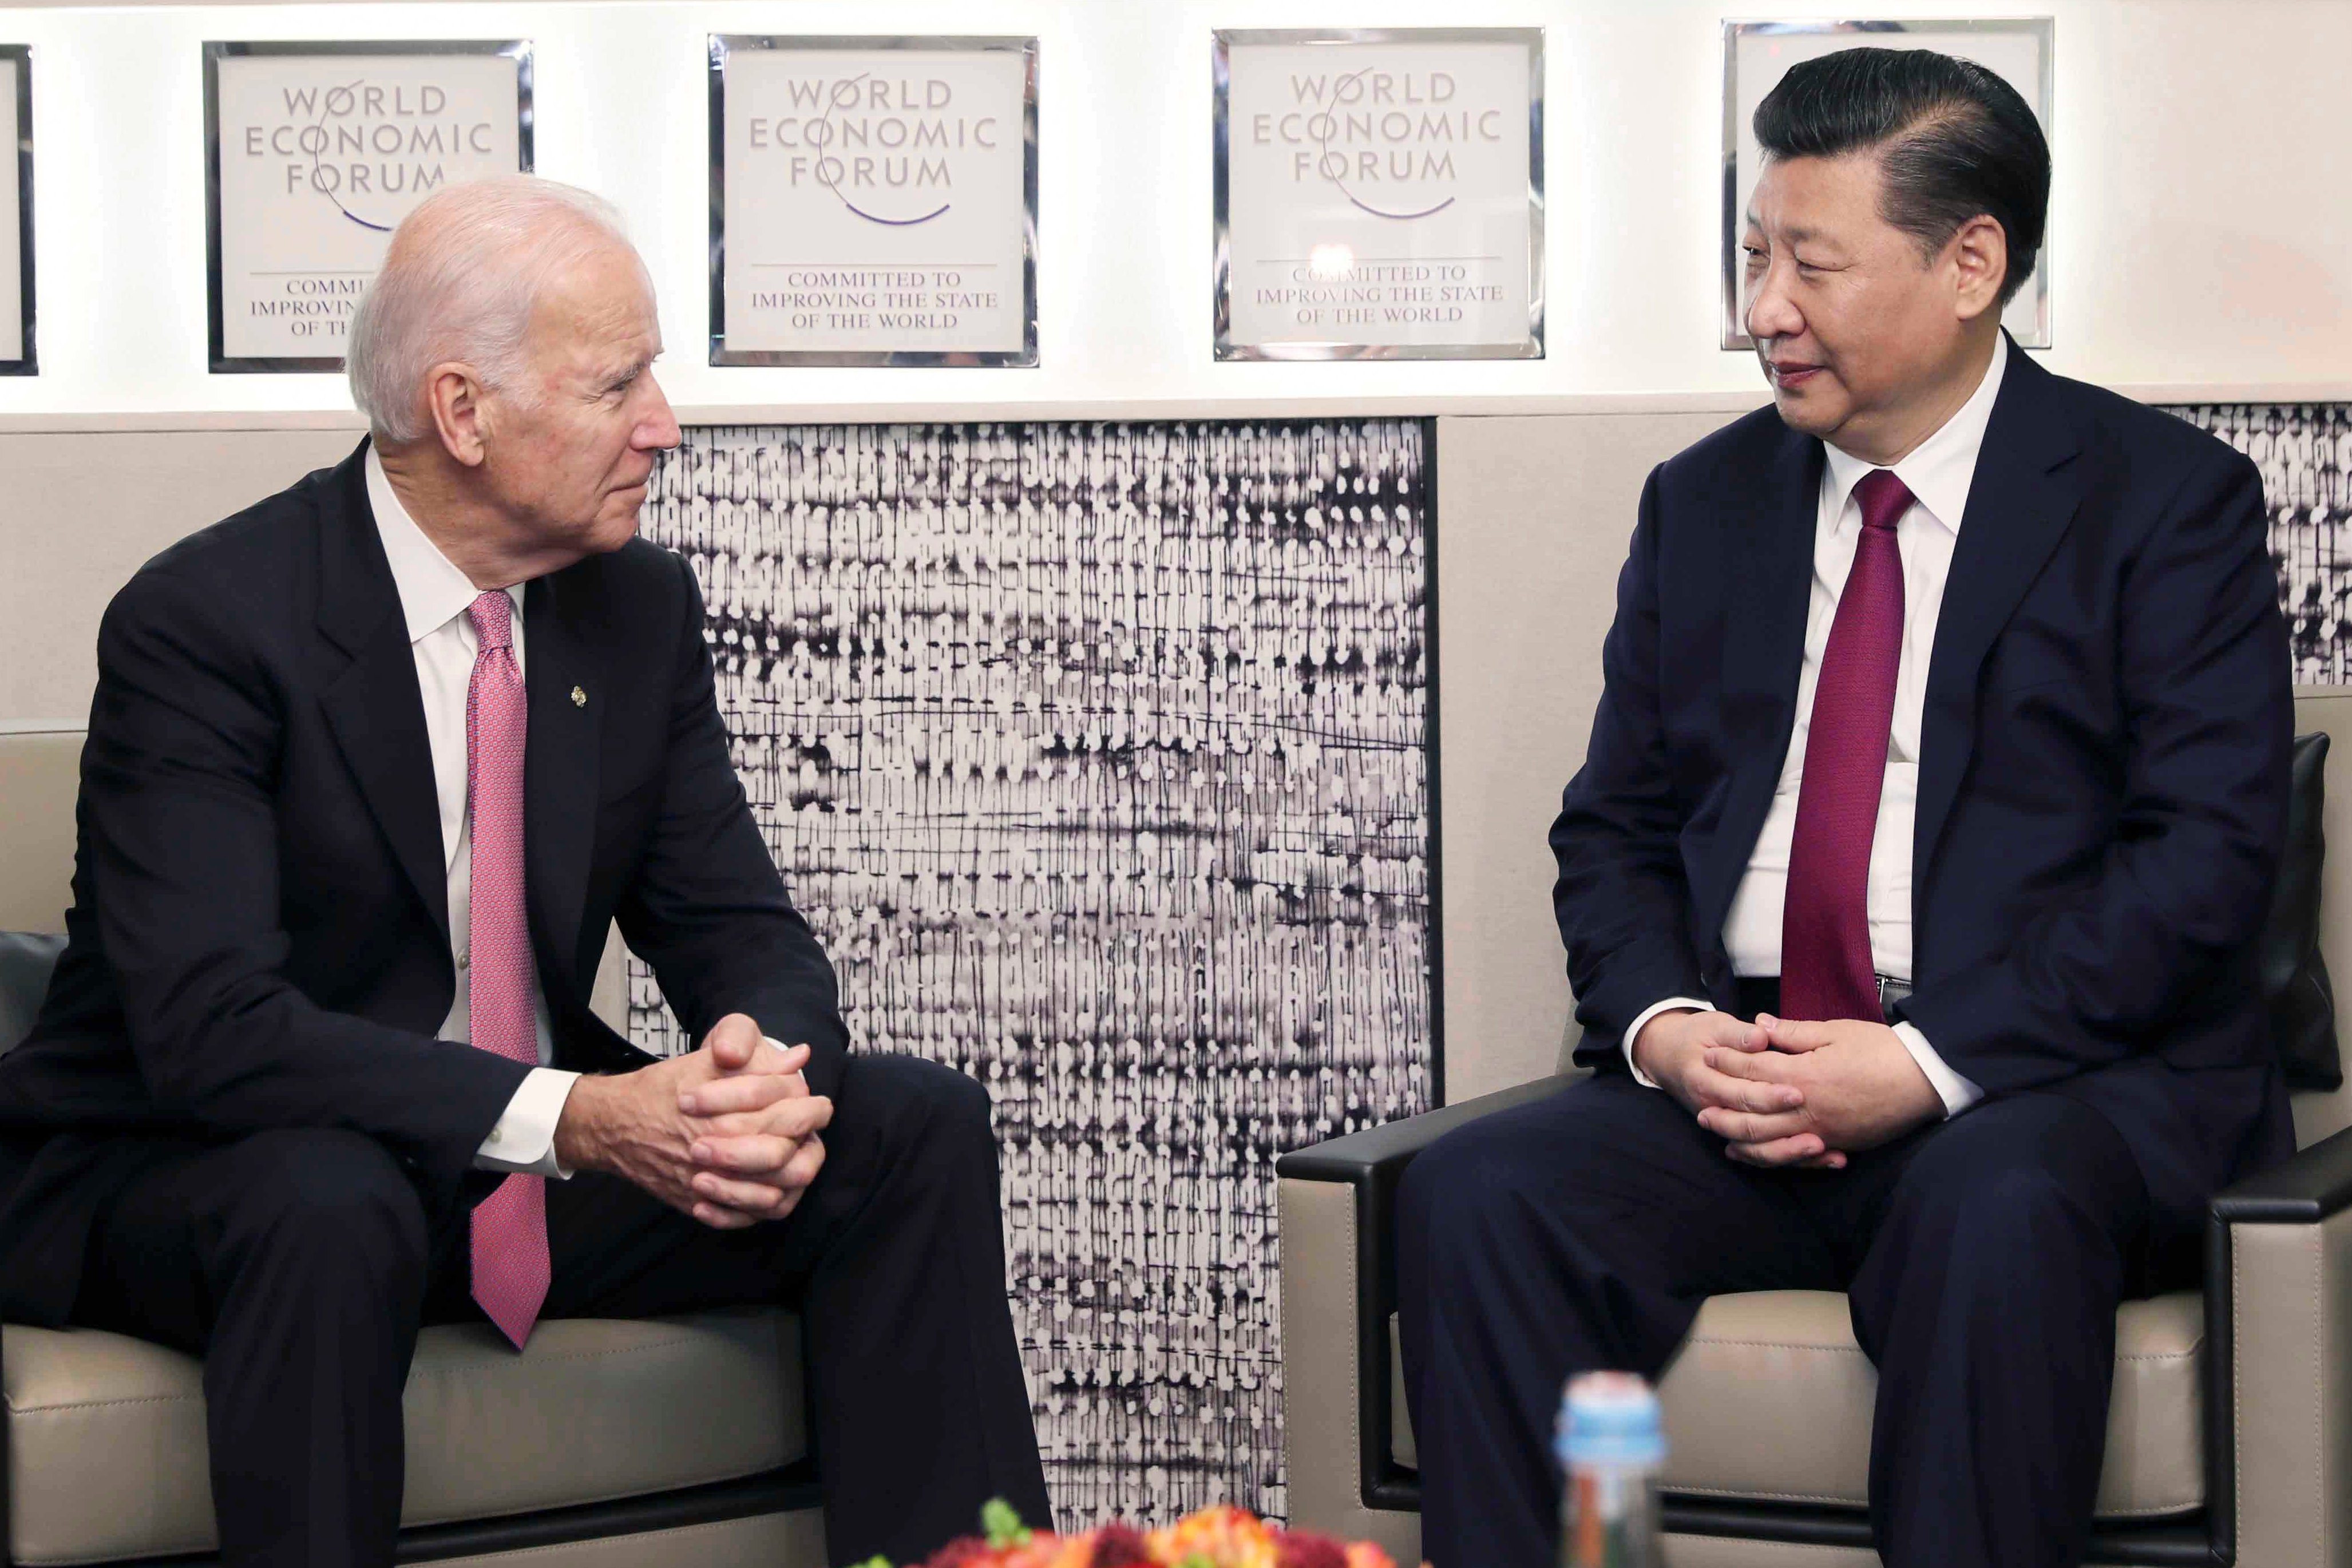 Joe Biden with President Xi Jinping of China at Davos, 2017.